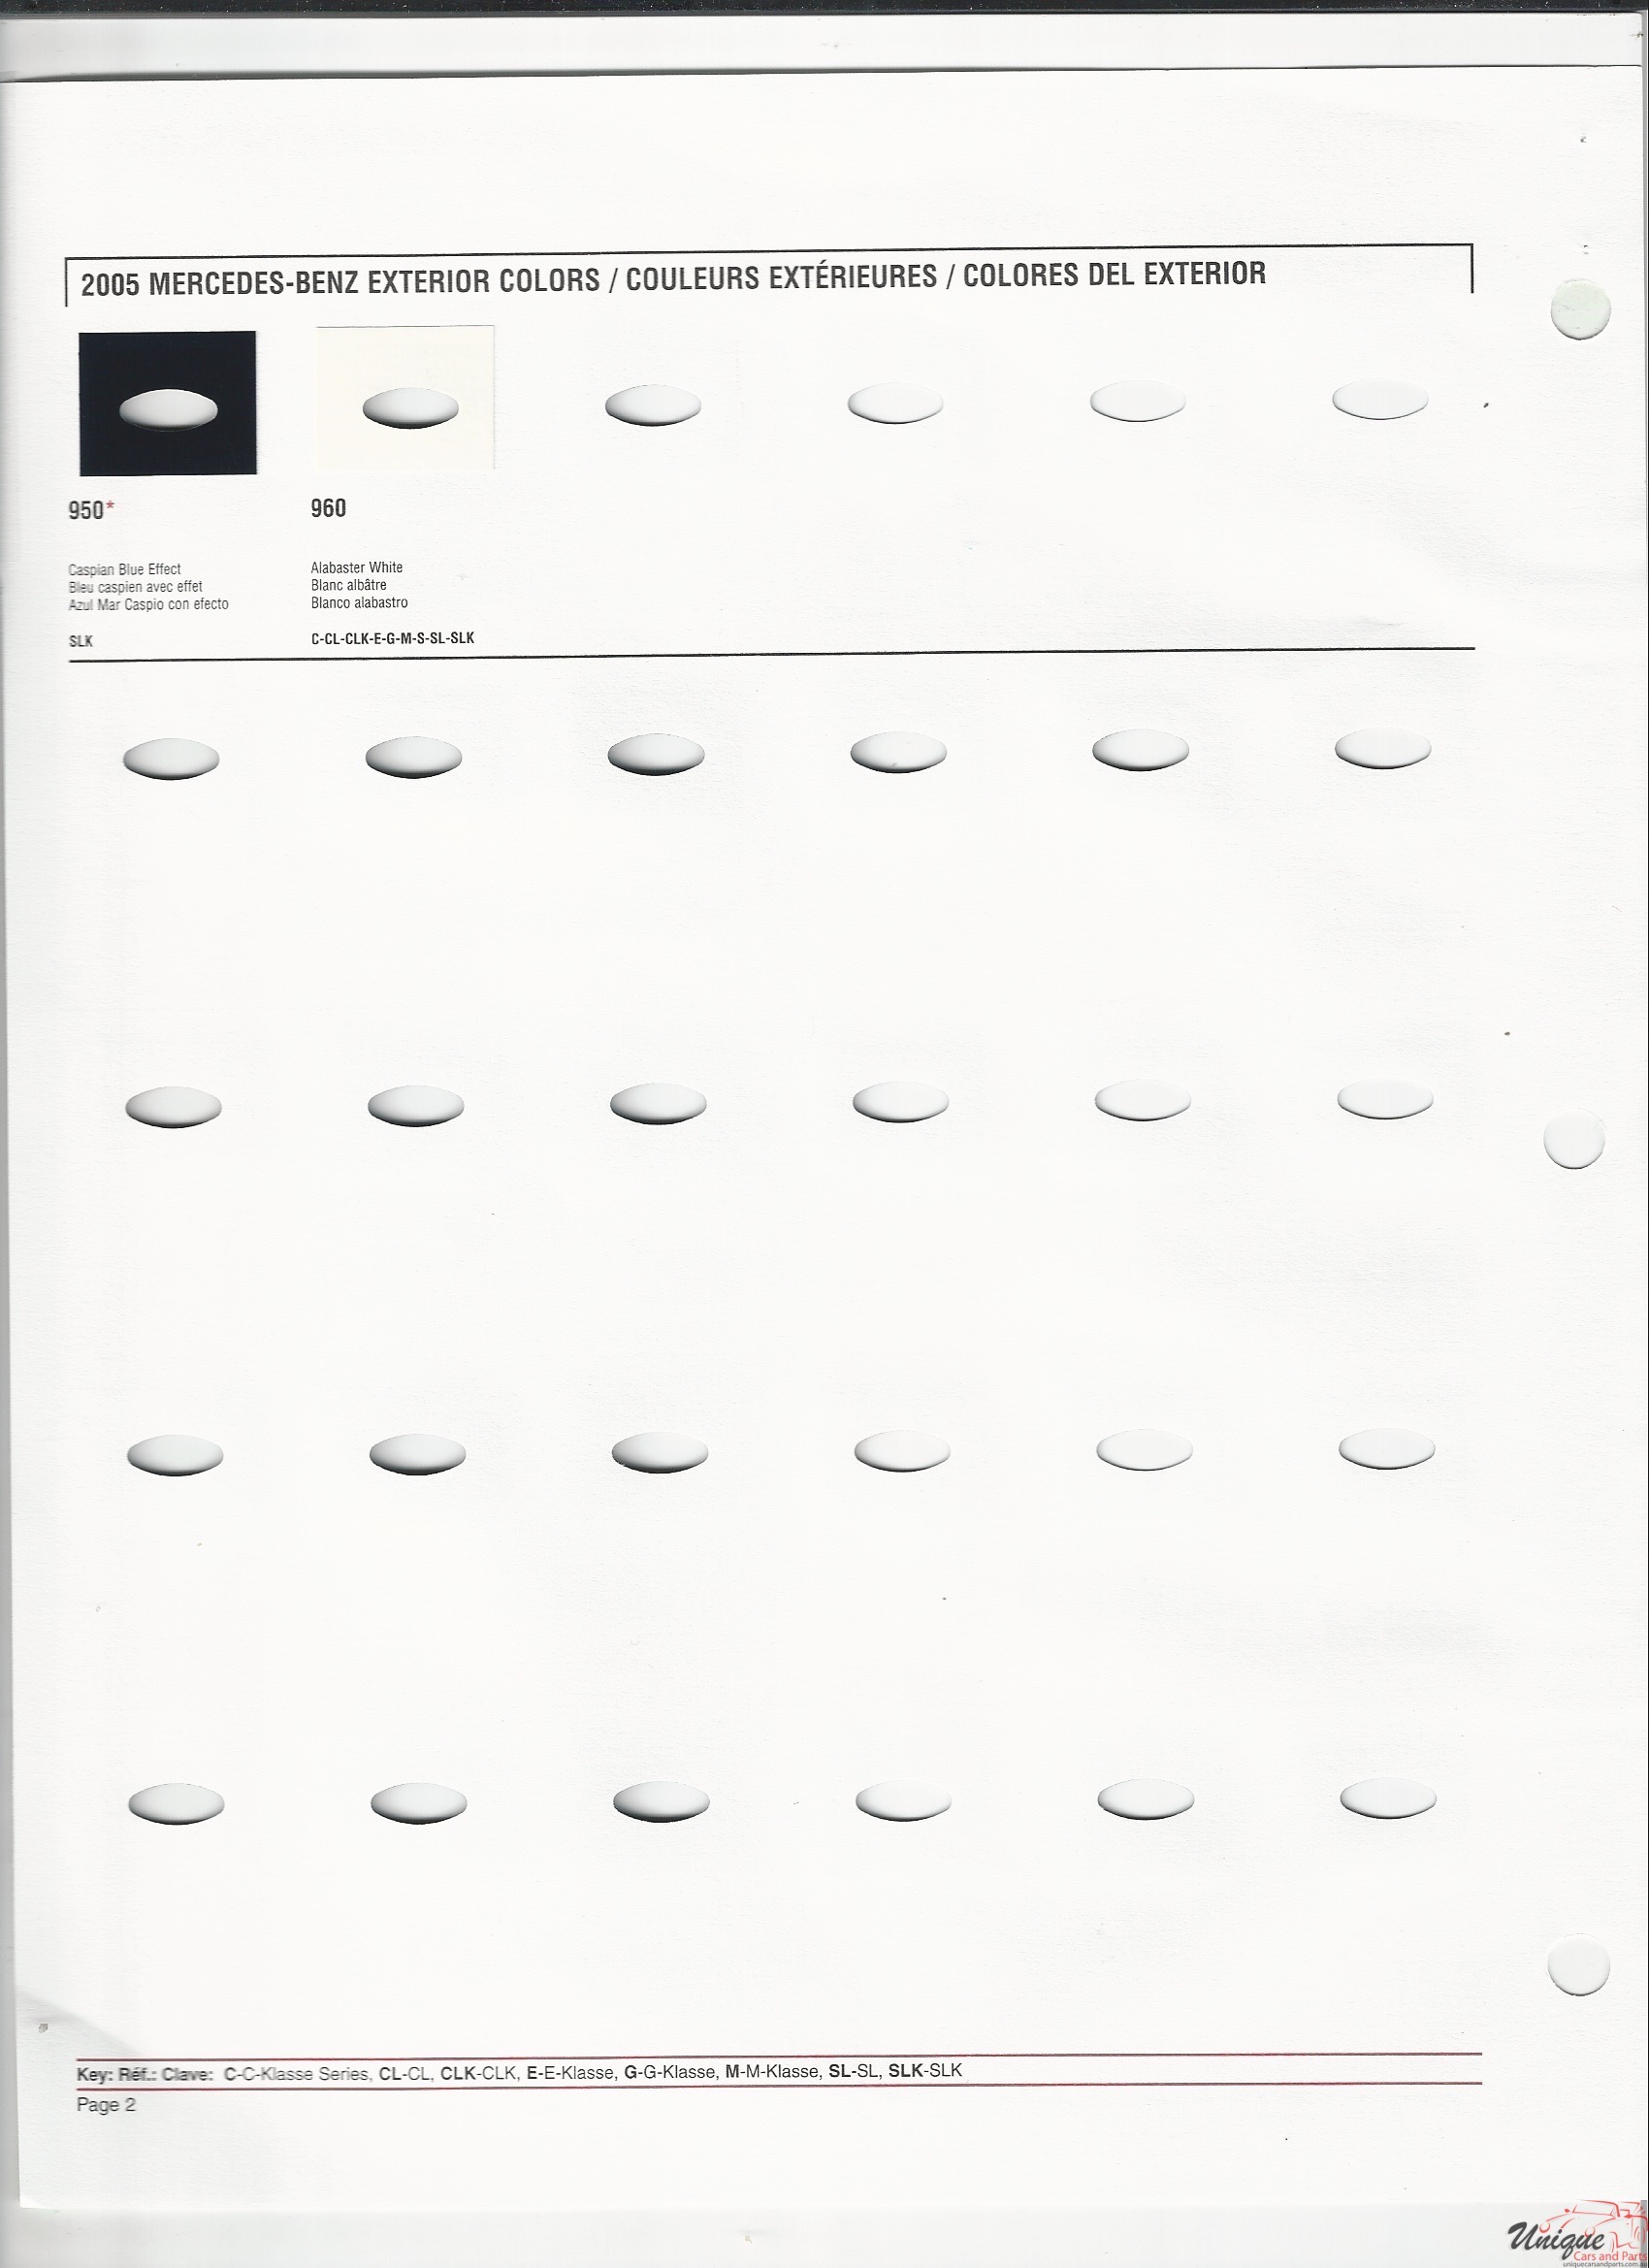 2005 Mercedes-Benz Paint Charts